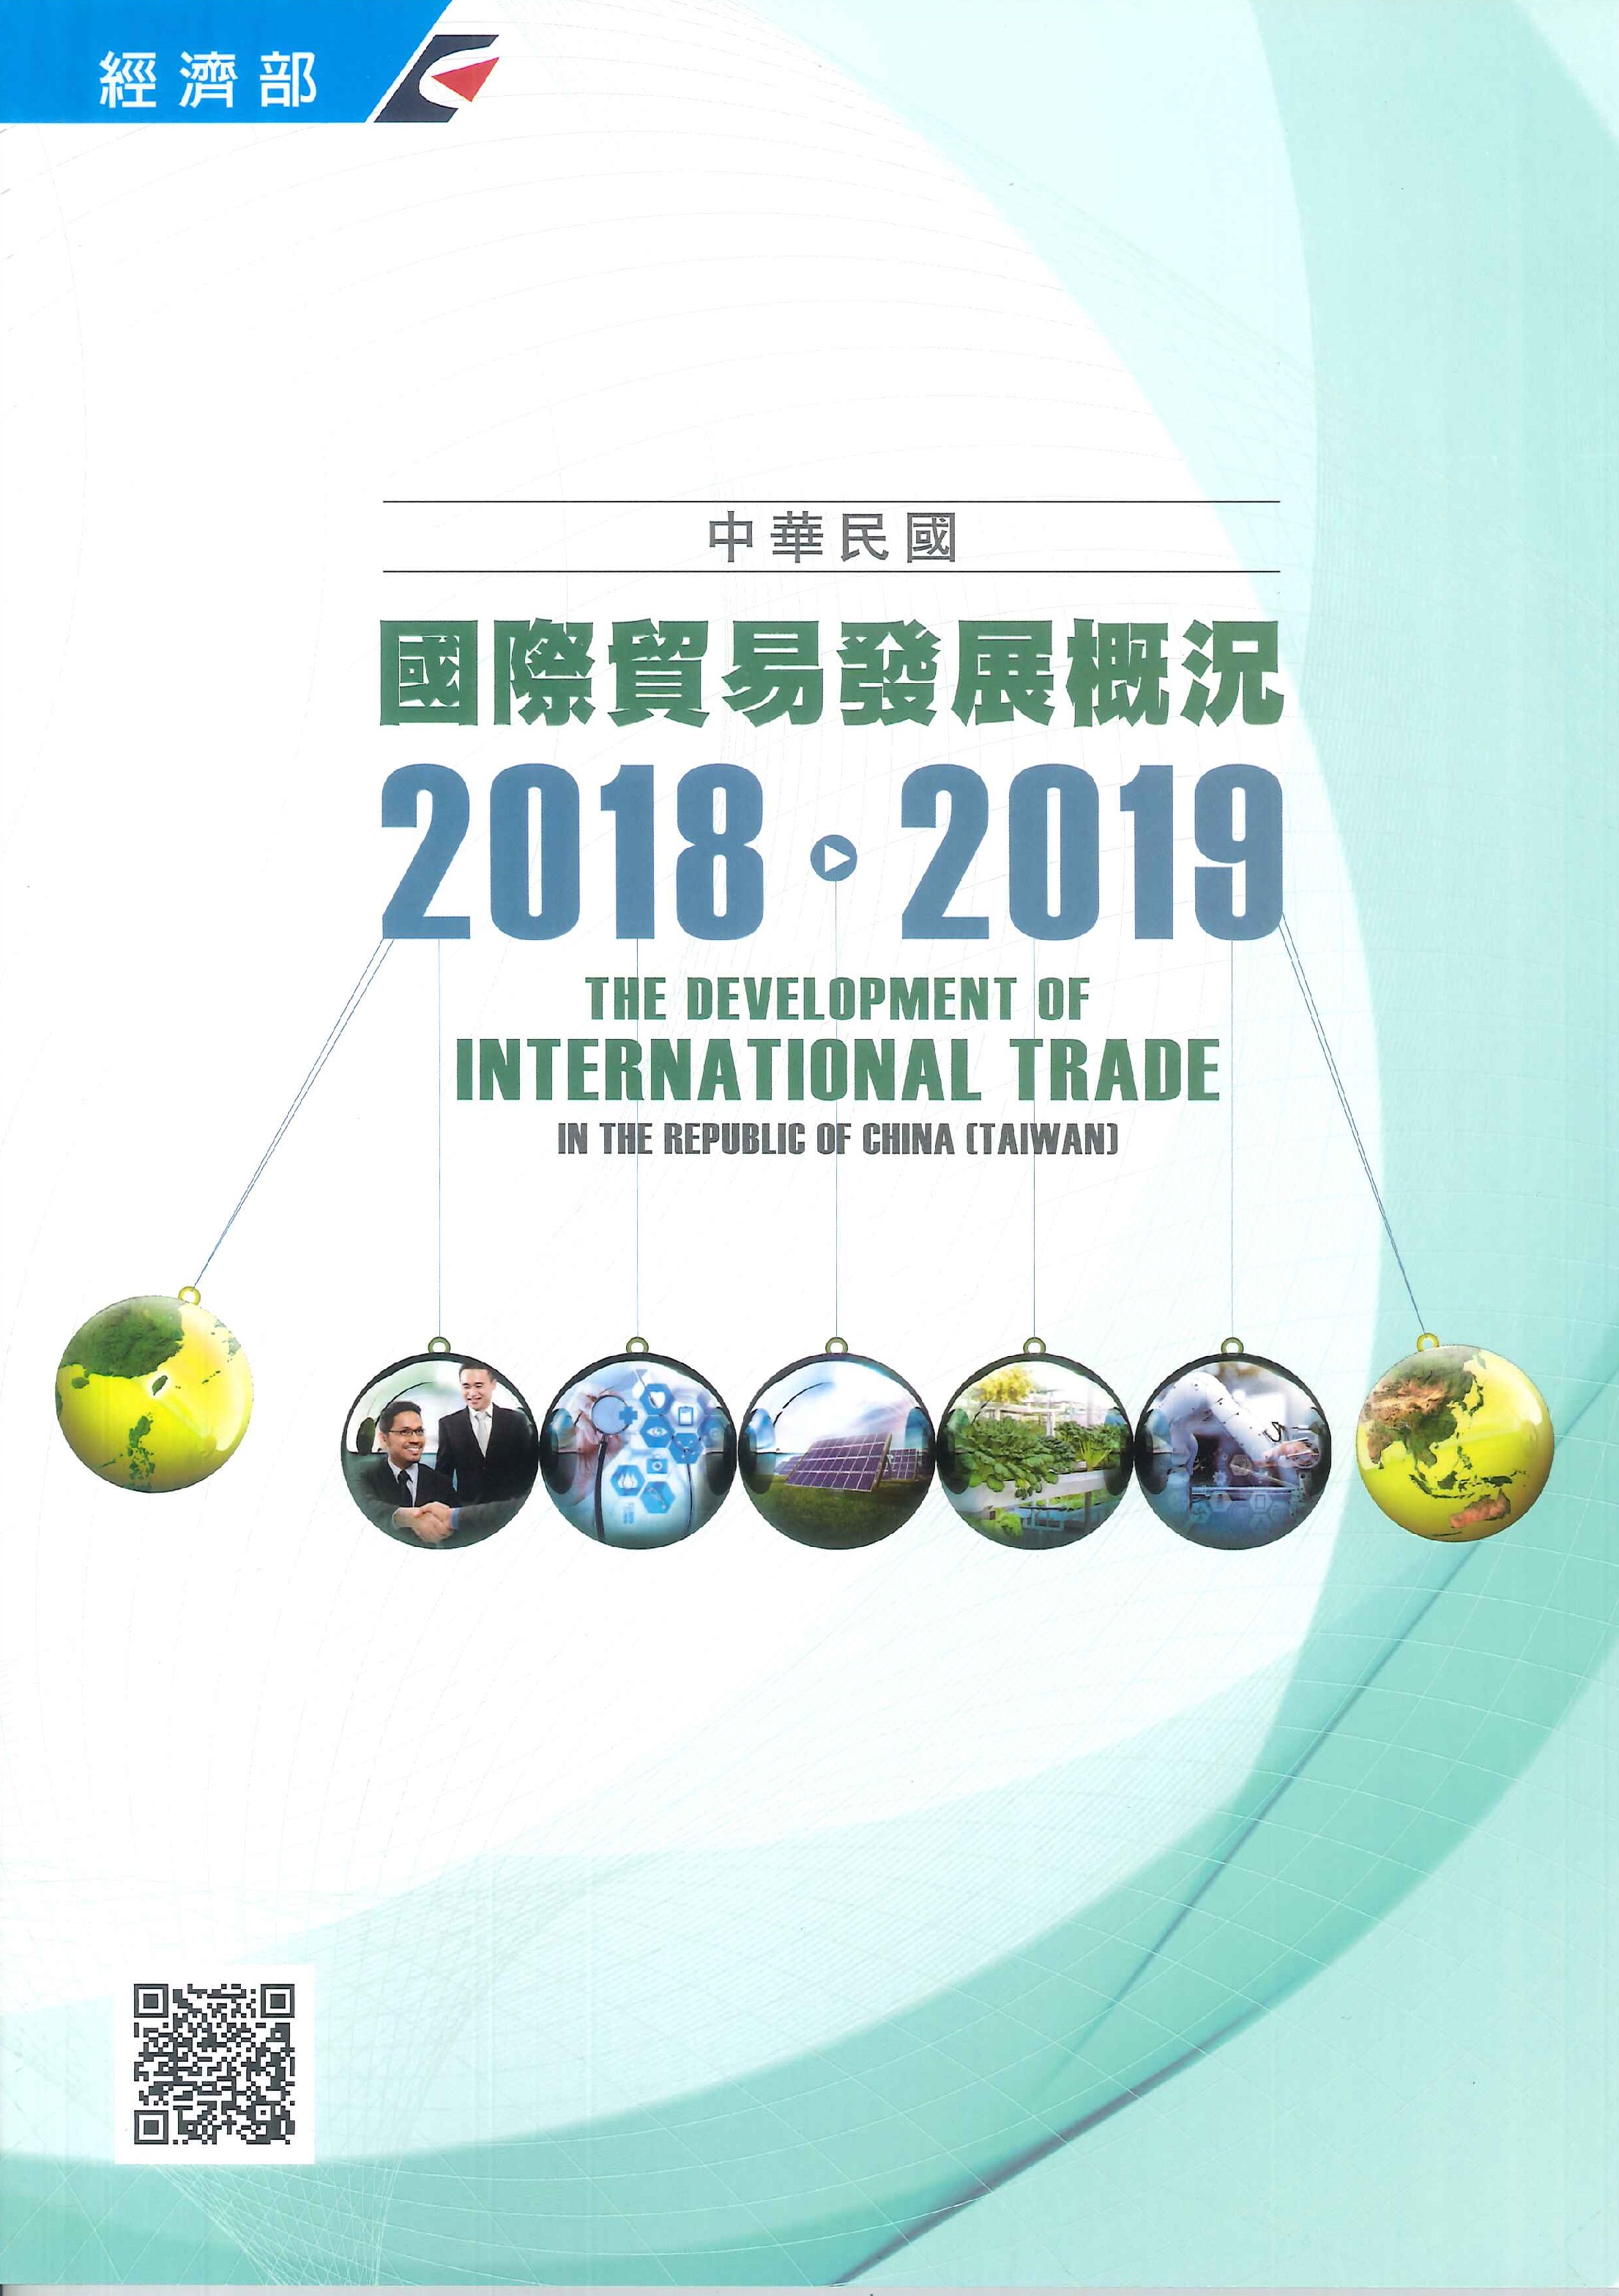 中華民國國際貿易發展概況=The development of international trade in the Republic of China (Taiwan)